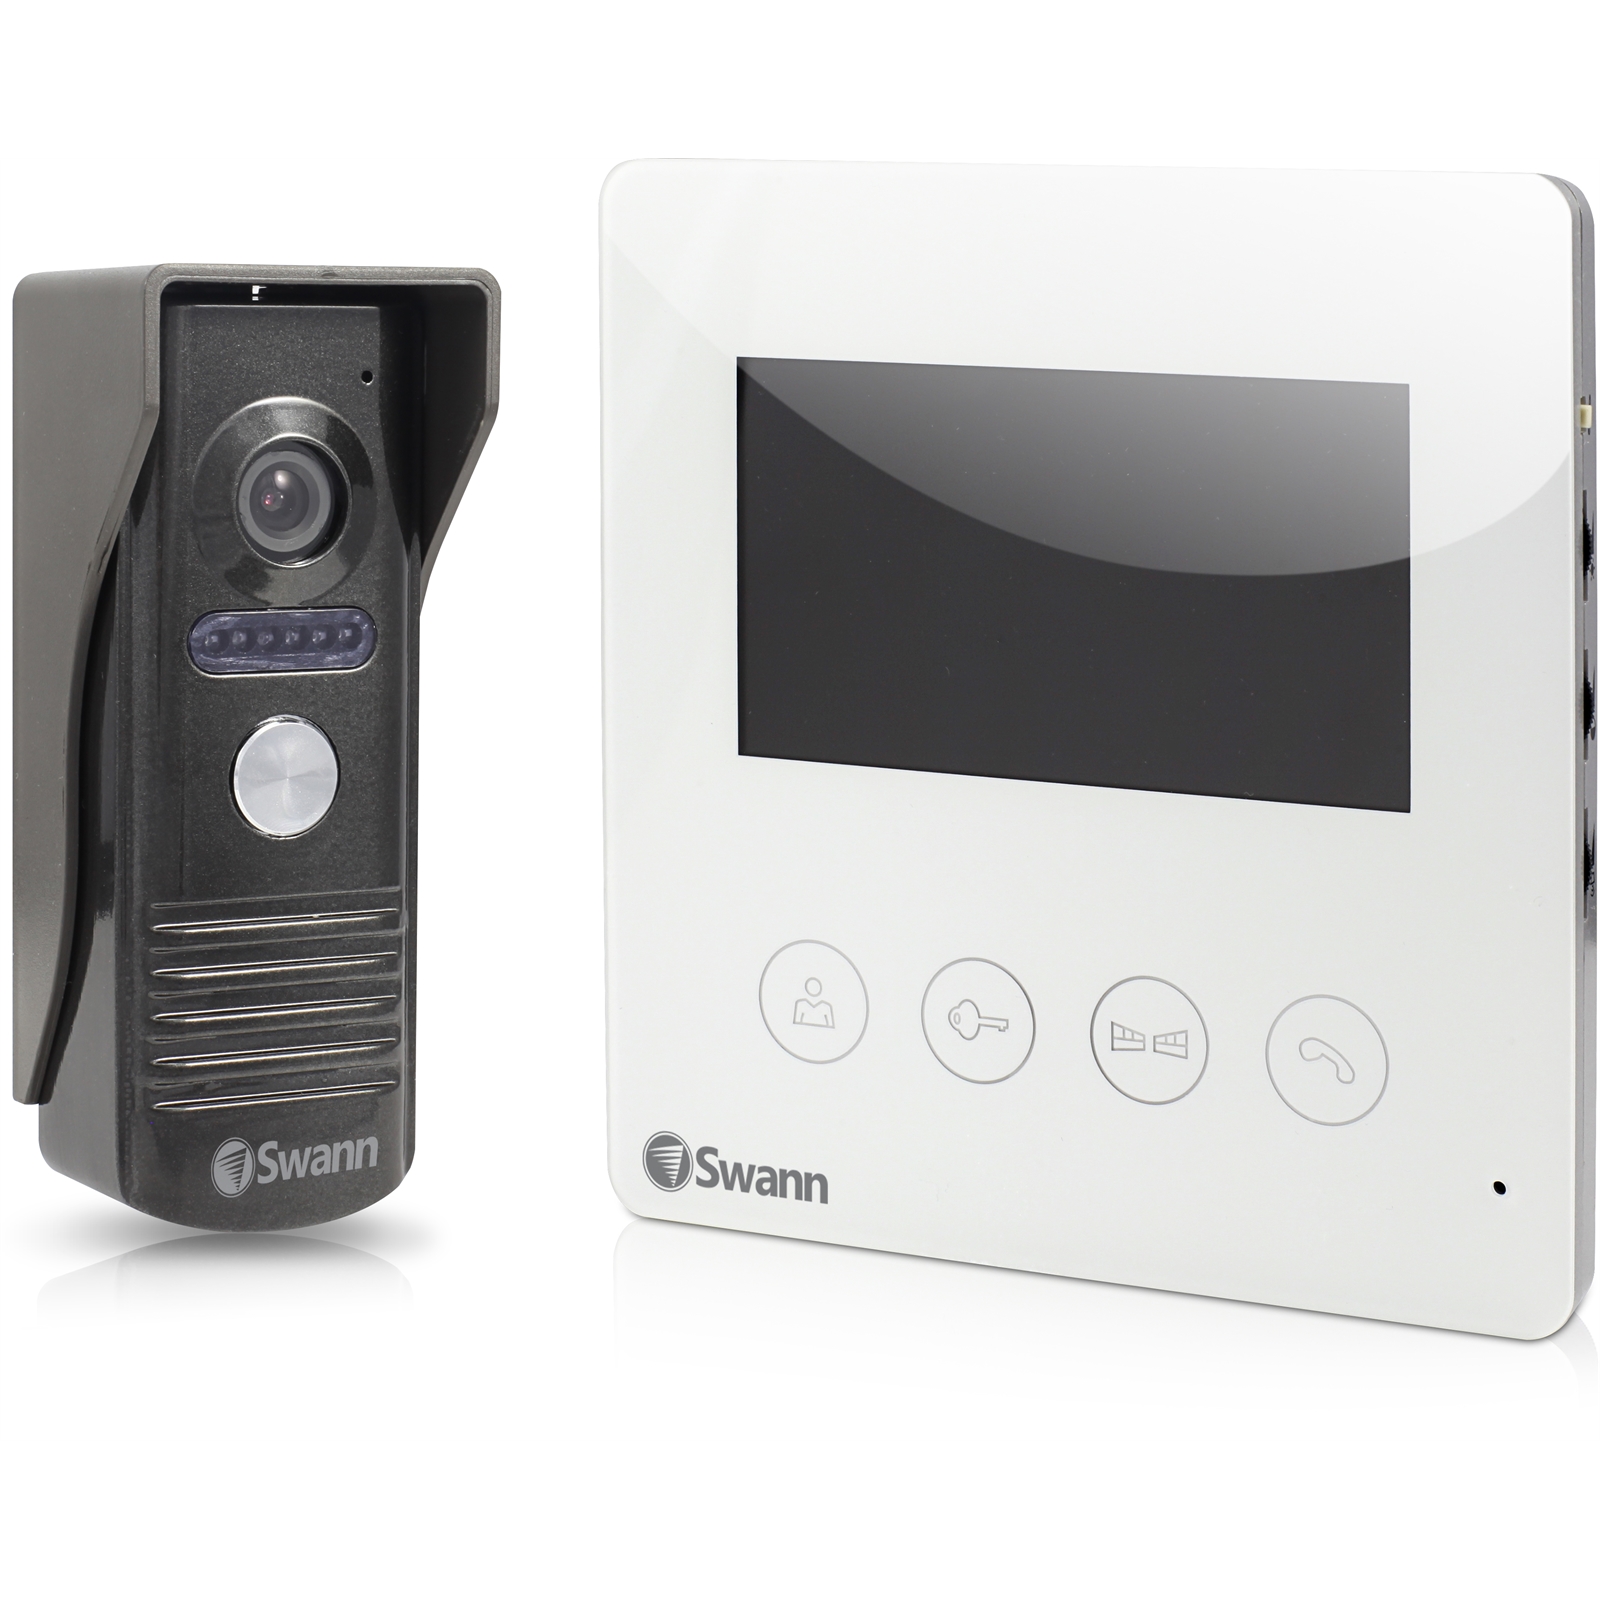 Swann 4.3" LCD Monitor Video Intercom Doorphone